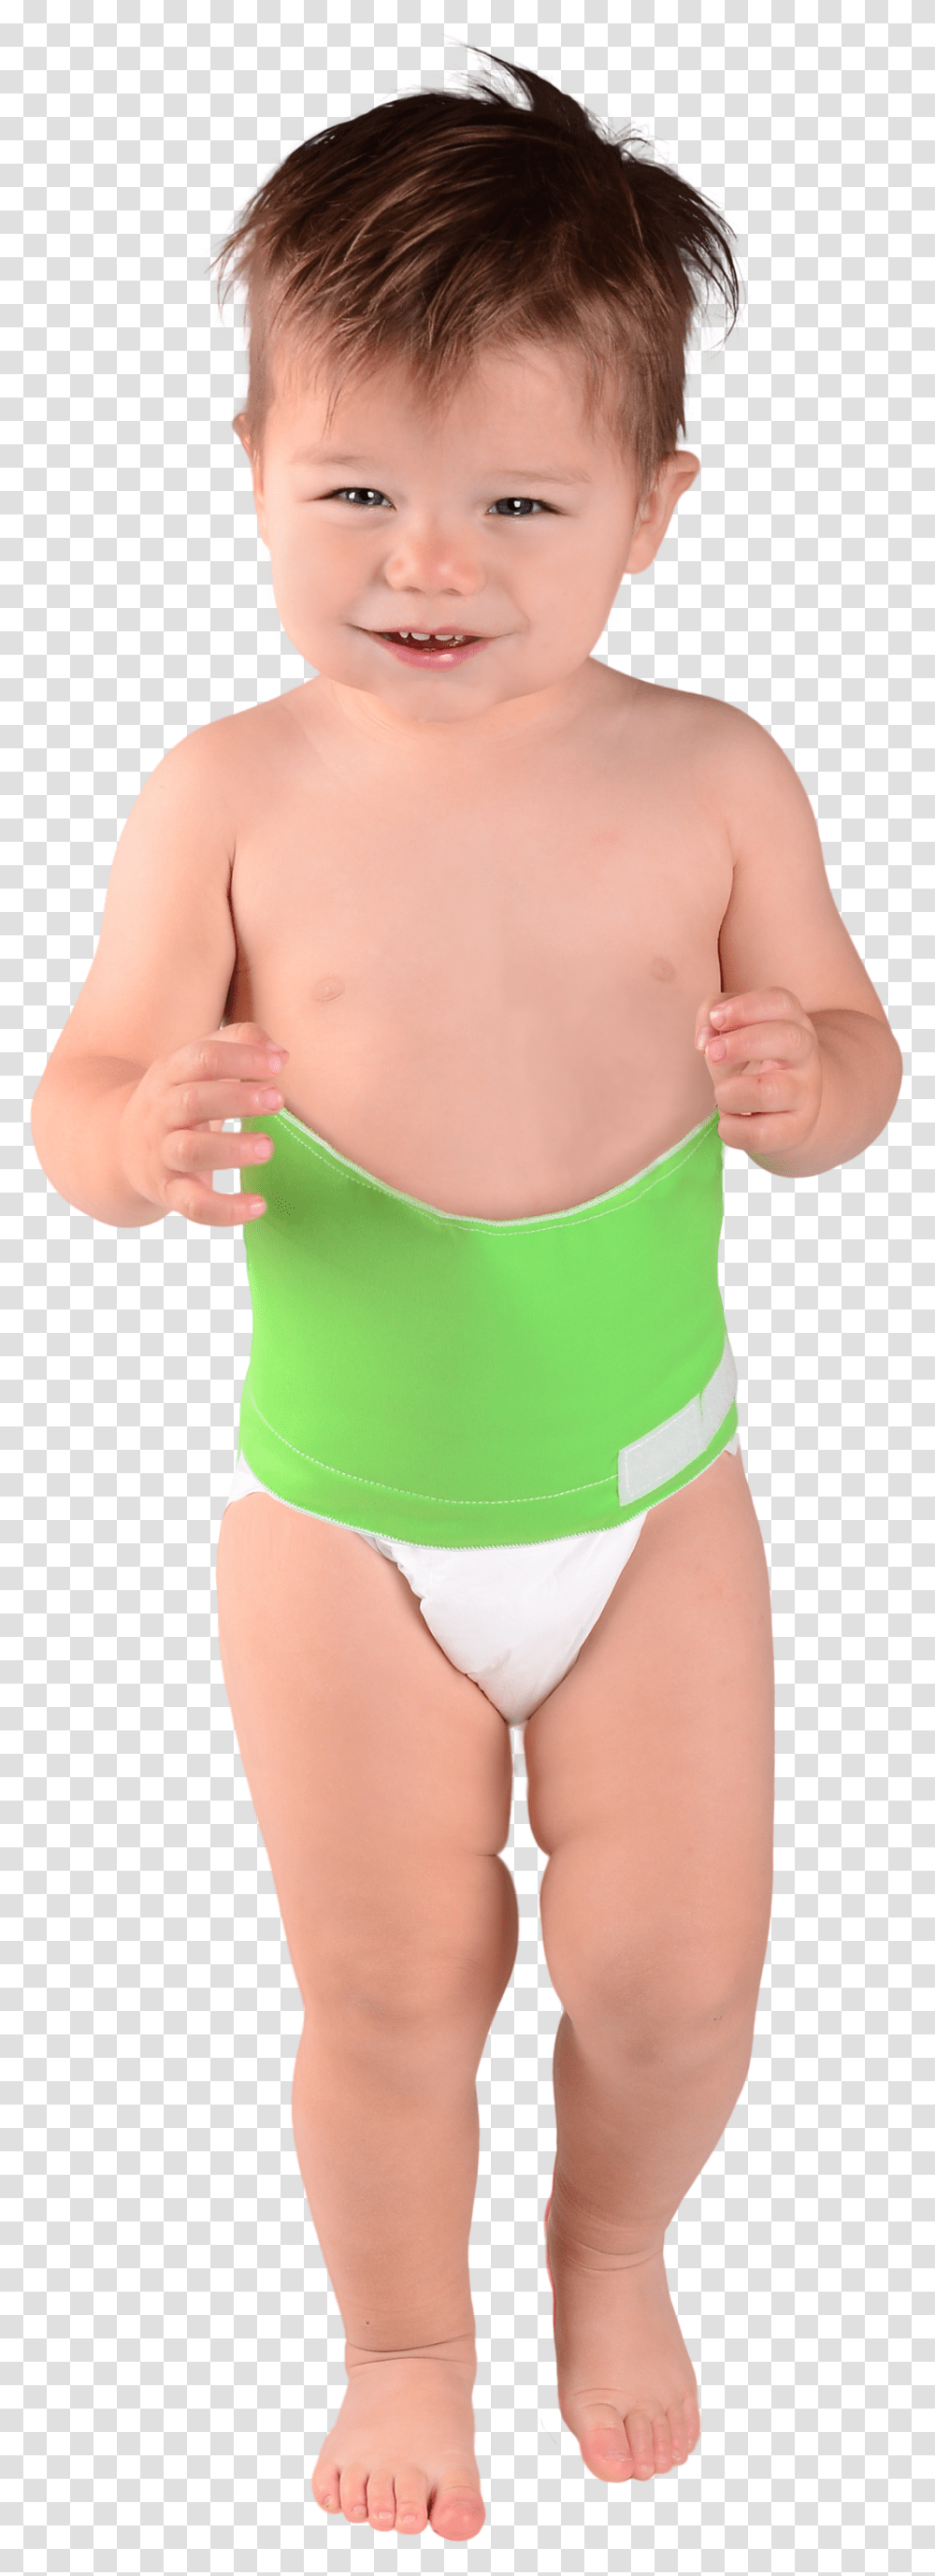 Smiling Cutebabyfreepngtransparentbackgroundimages Cute Baby Standing, Clothing, Underwear, Person, Lingerie Transparent Png